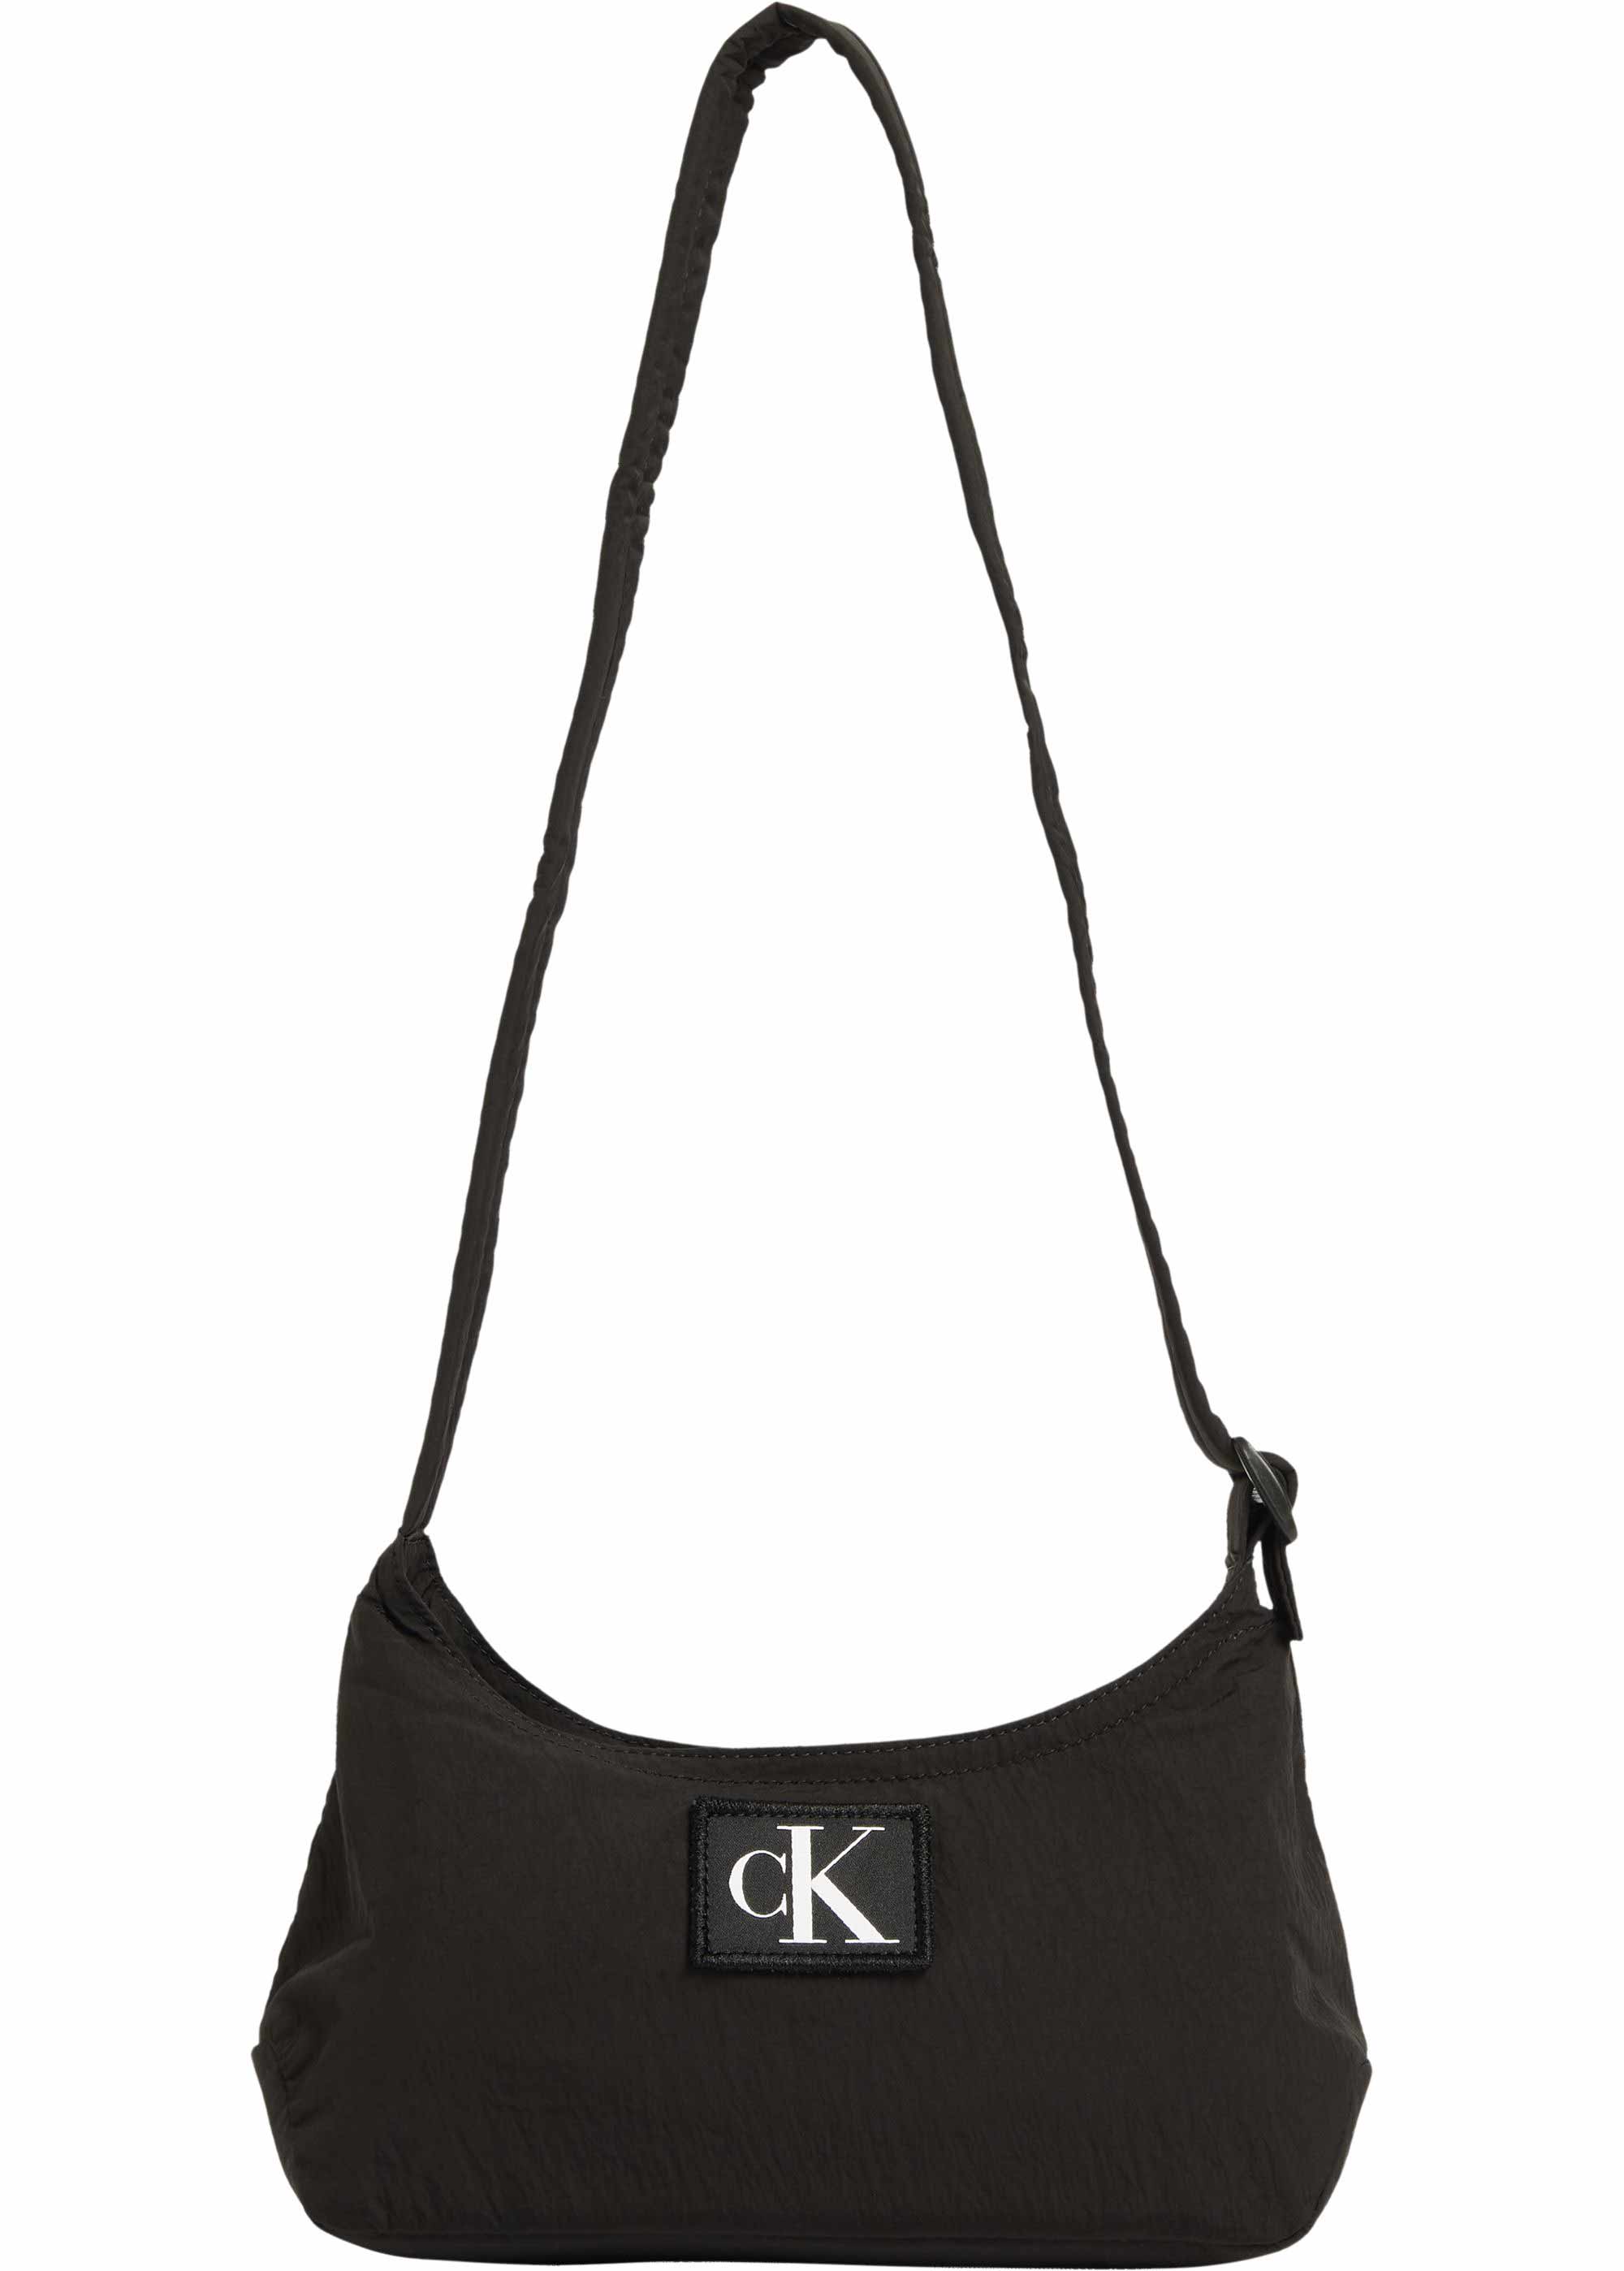 Calvin Klein Jeans Woman's Bag 8719856984885